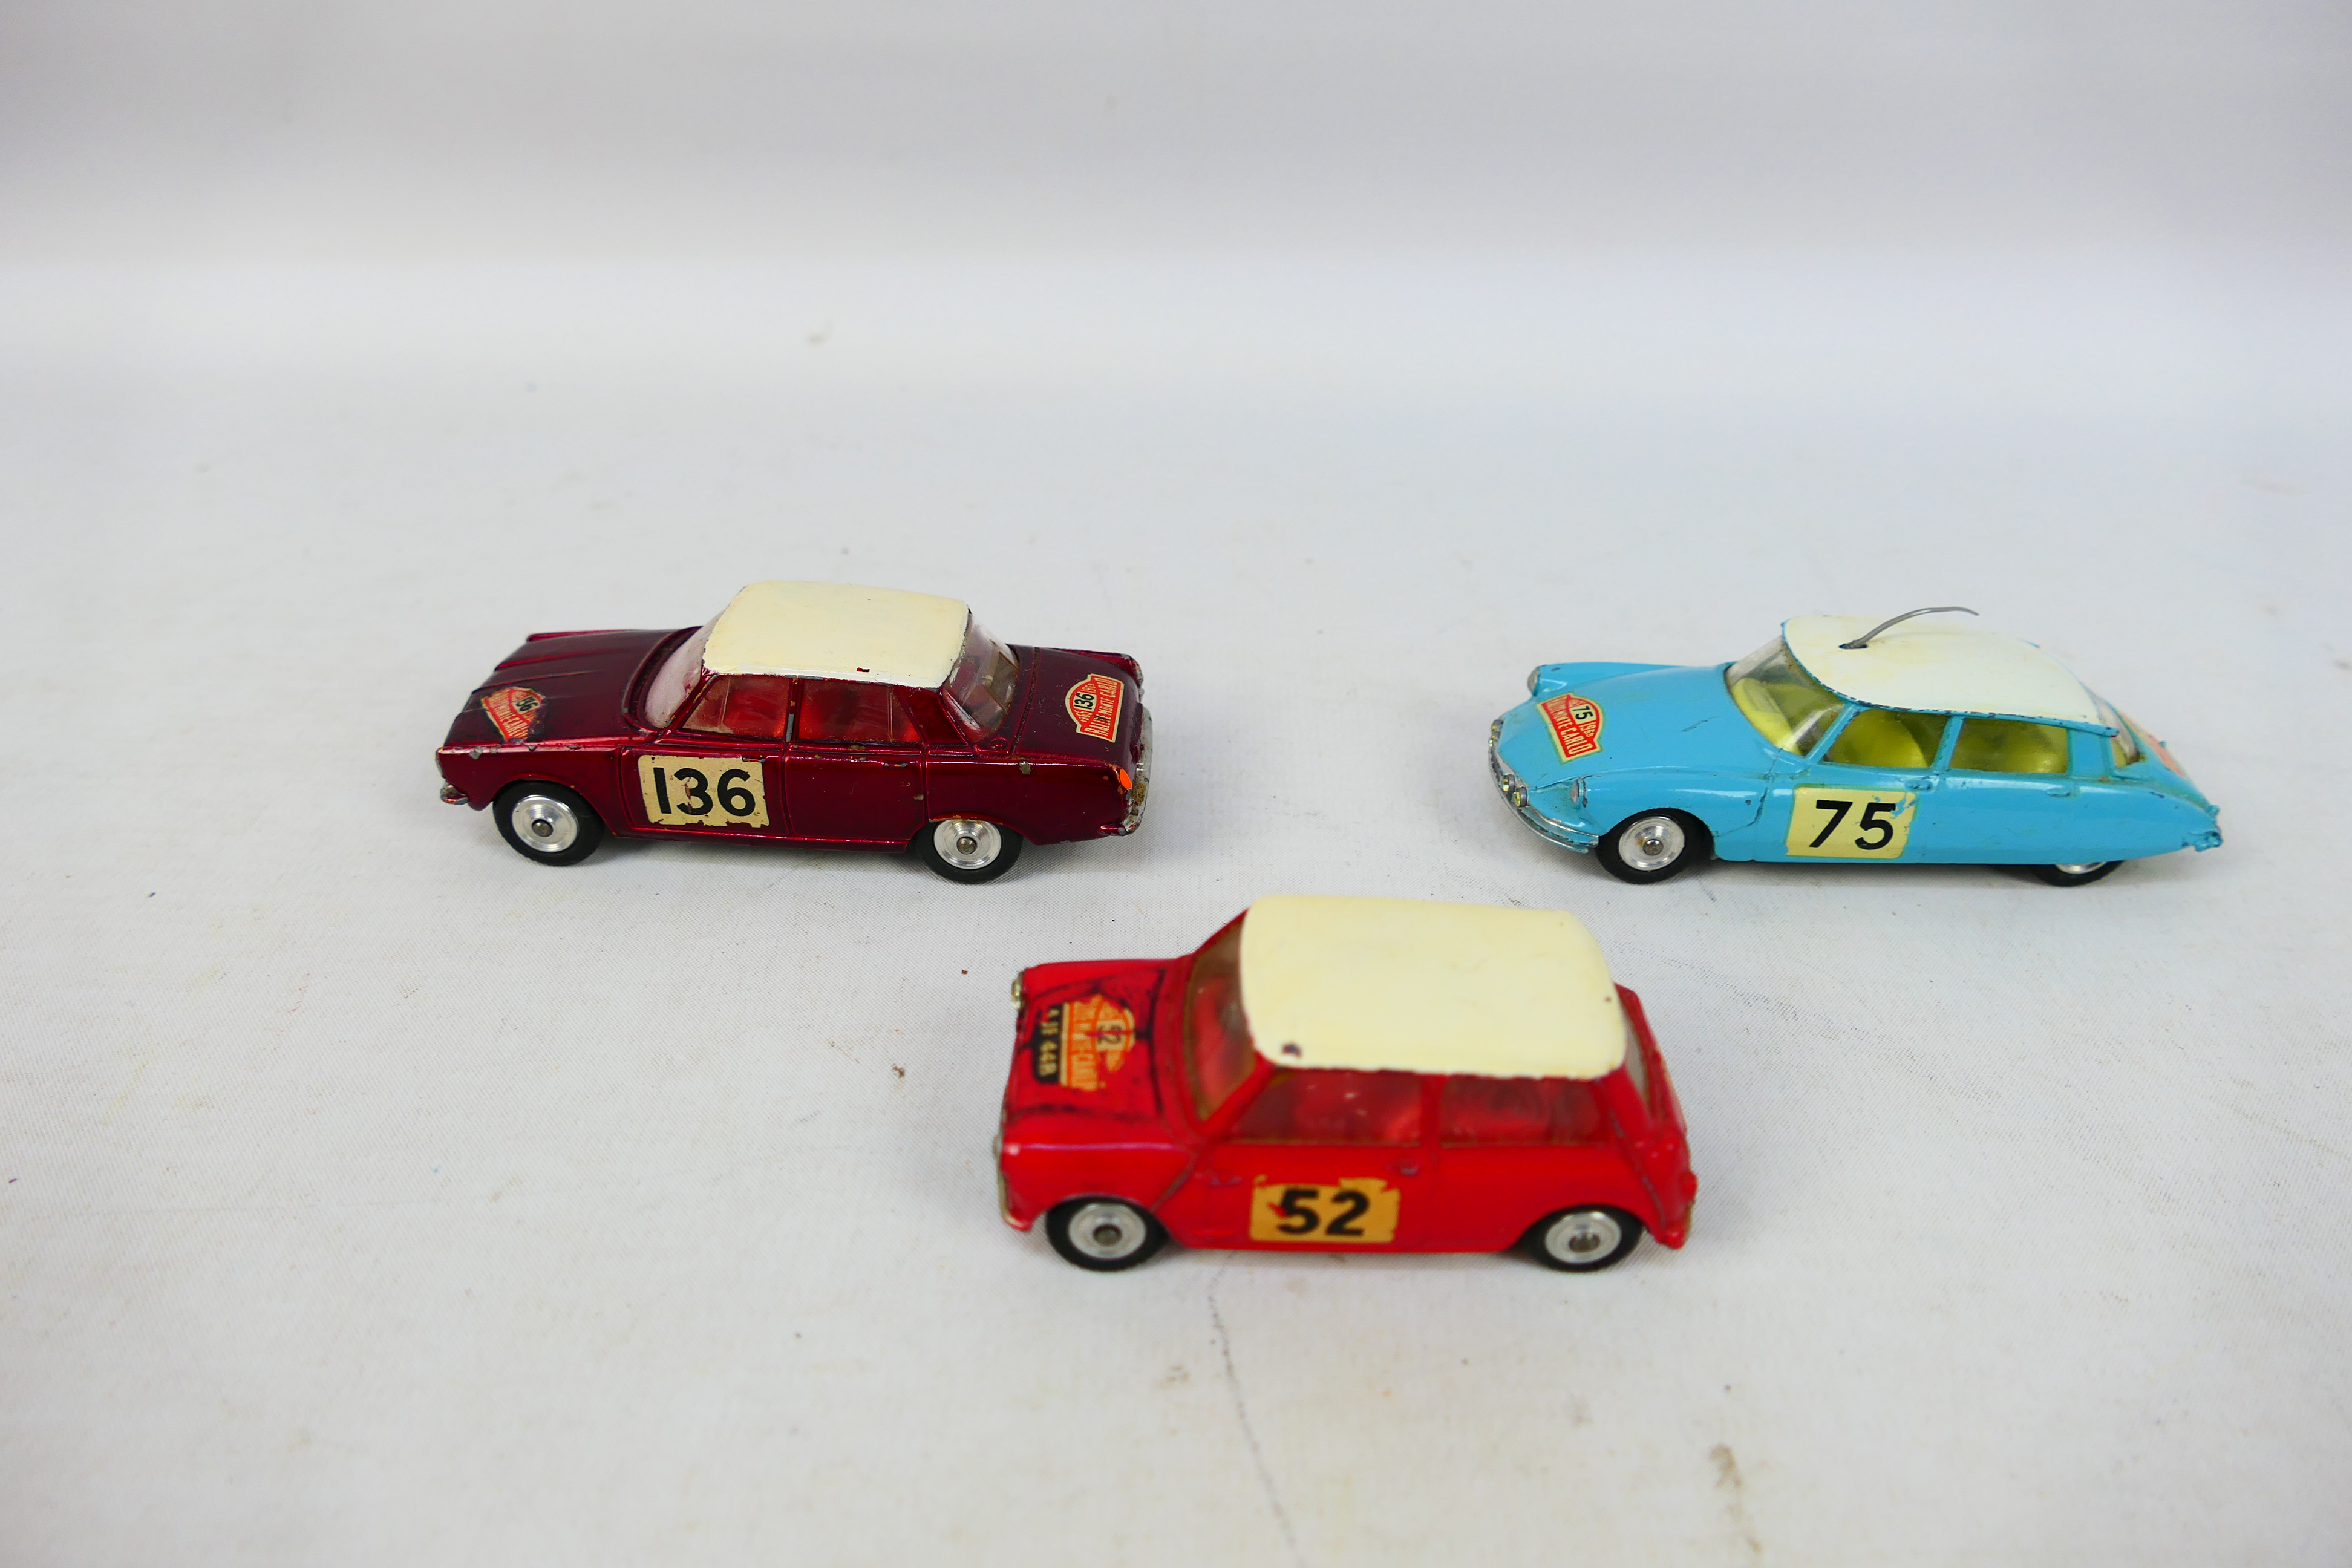 Corgi Toys - Three unboxed diecast model cars from the Corgi Toys 'Rally Monte Carlo' set.